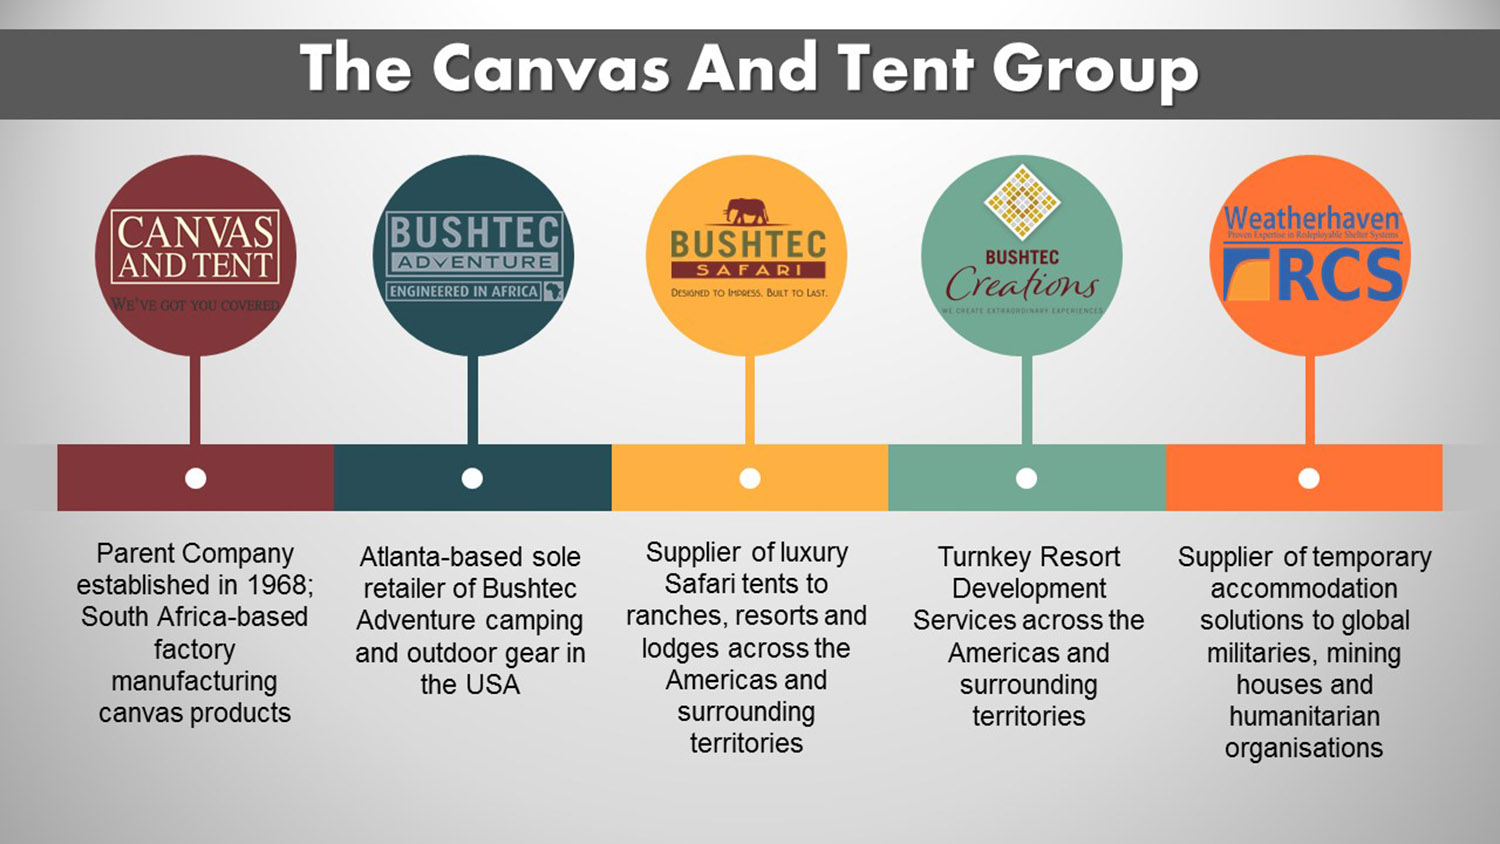 Infographic of Canvas and Tent Group progression with Bushtec Adventure Bushtec Safari Bushtec Creations and Weatherhaven RCS